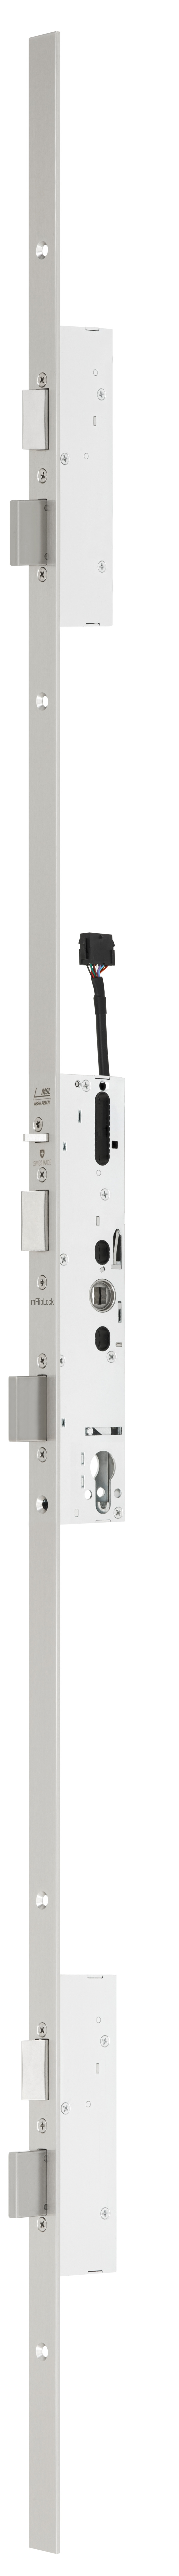 mFlipLock panic security multi-point locking system 24574PE-SV